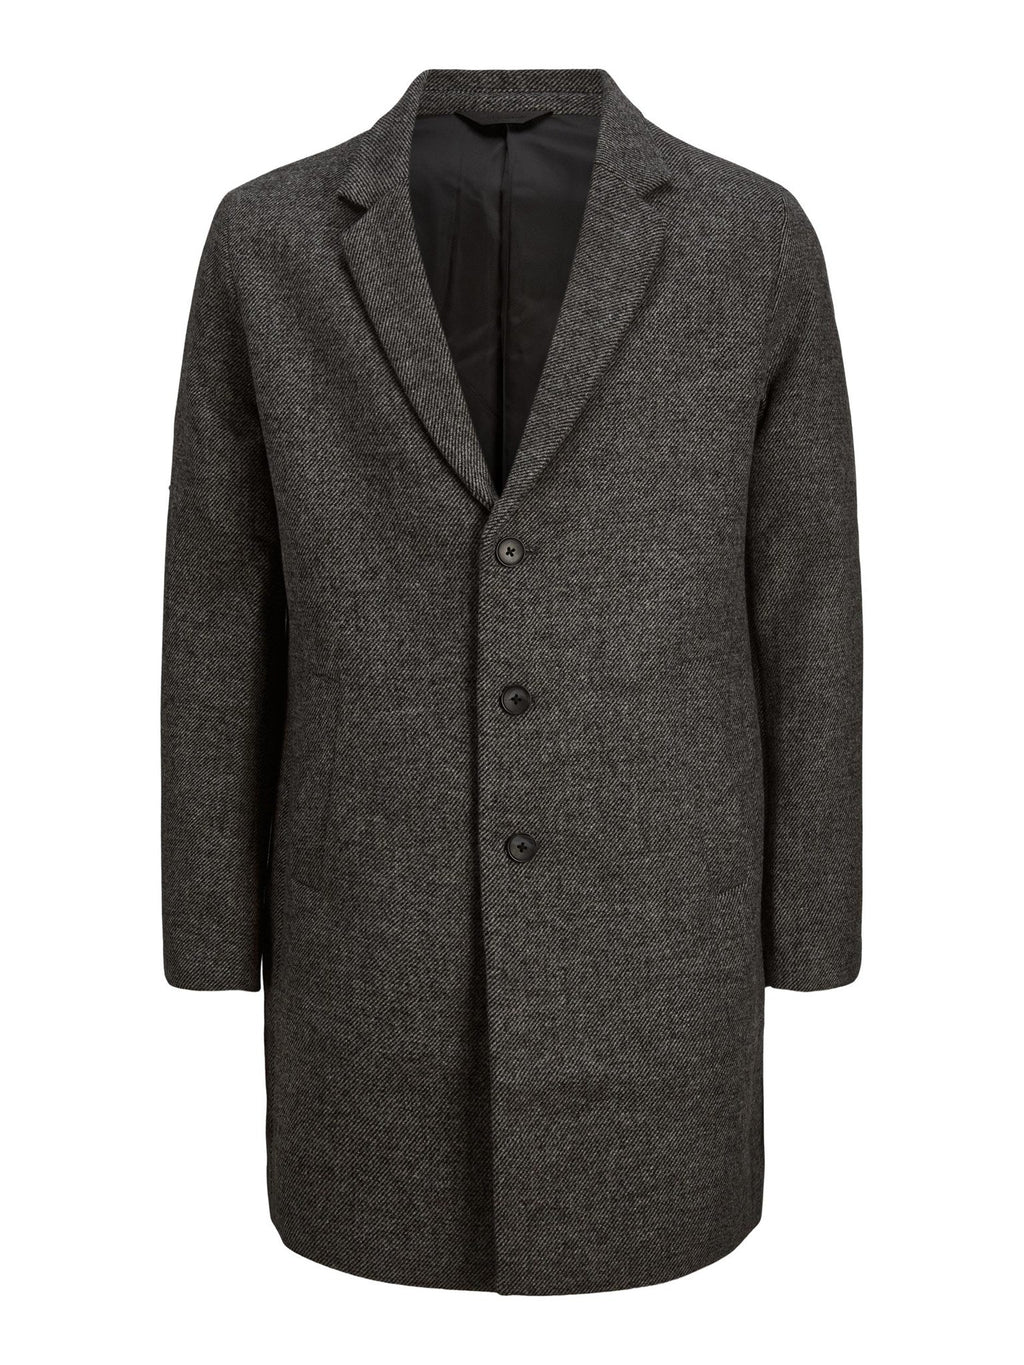 Moulder Wool Coat - Melange gris foncé